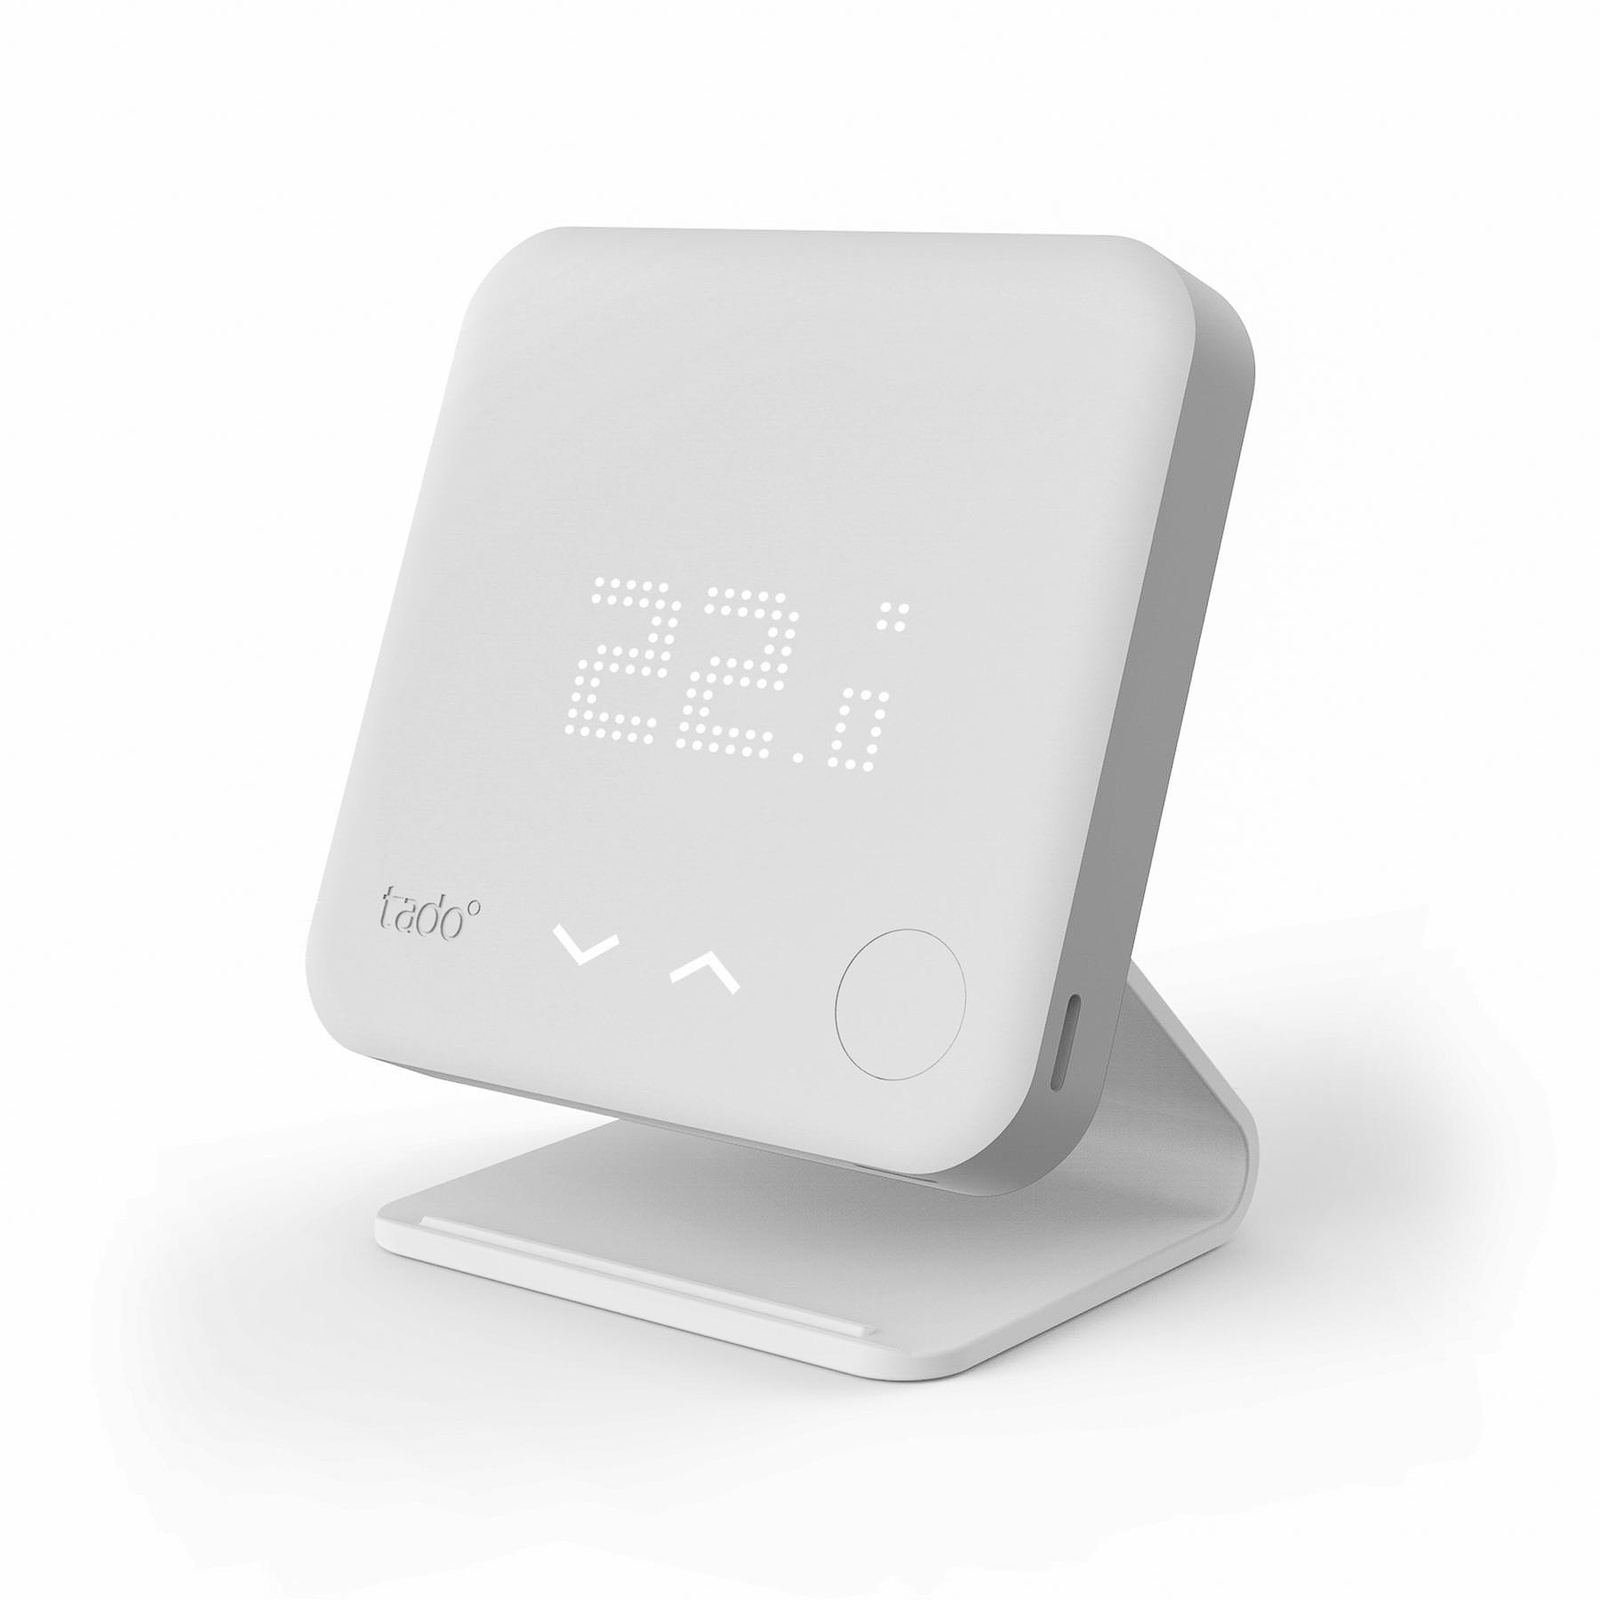 tado° wireless temperature sensor with a stand